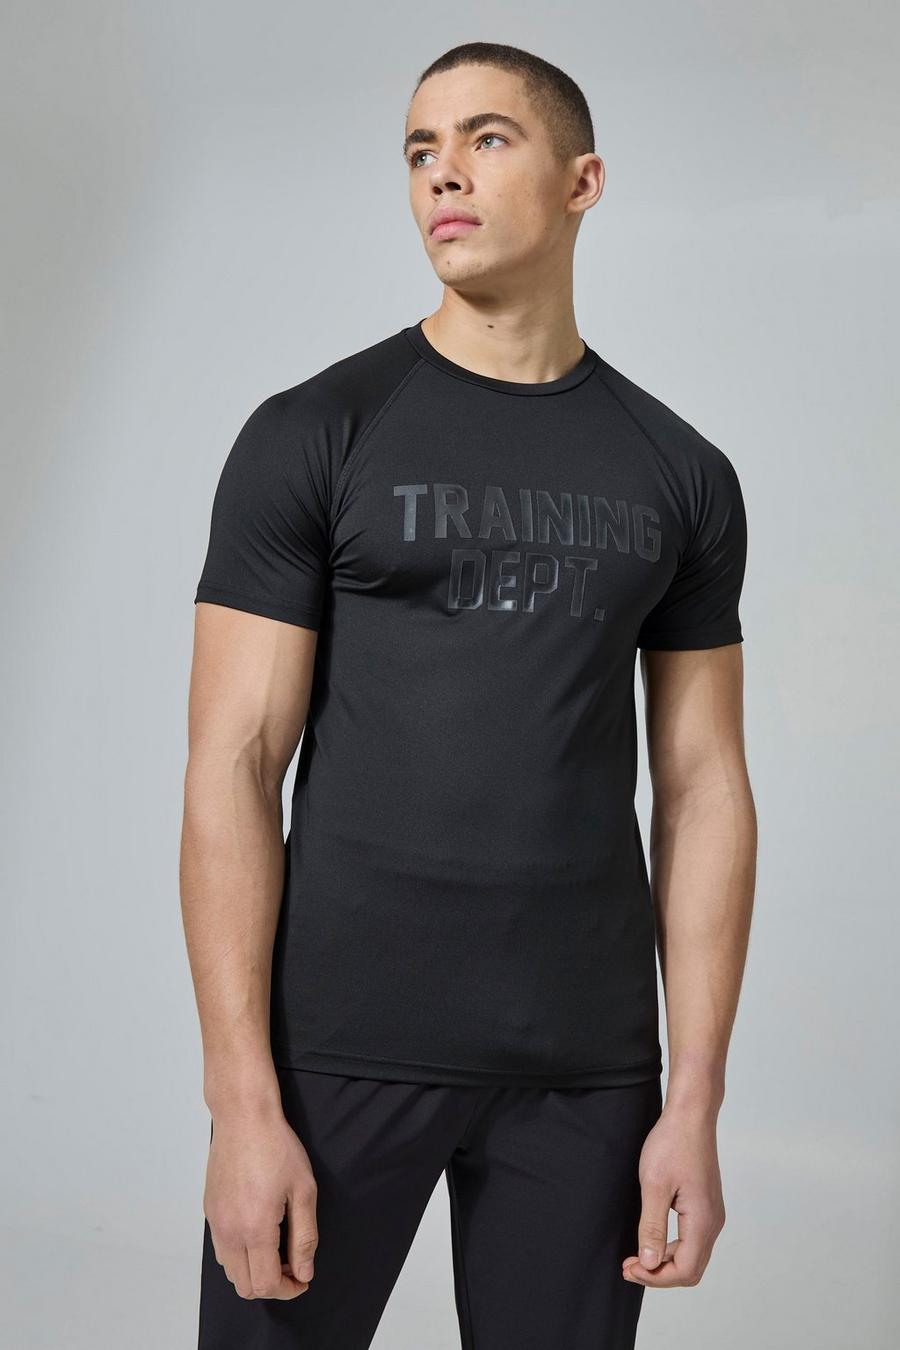 Active Trainings Dept Muscle-Fit T-Shirt, Black